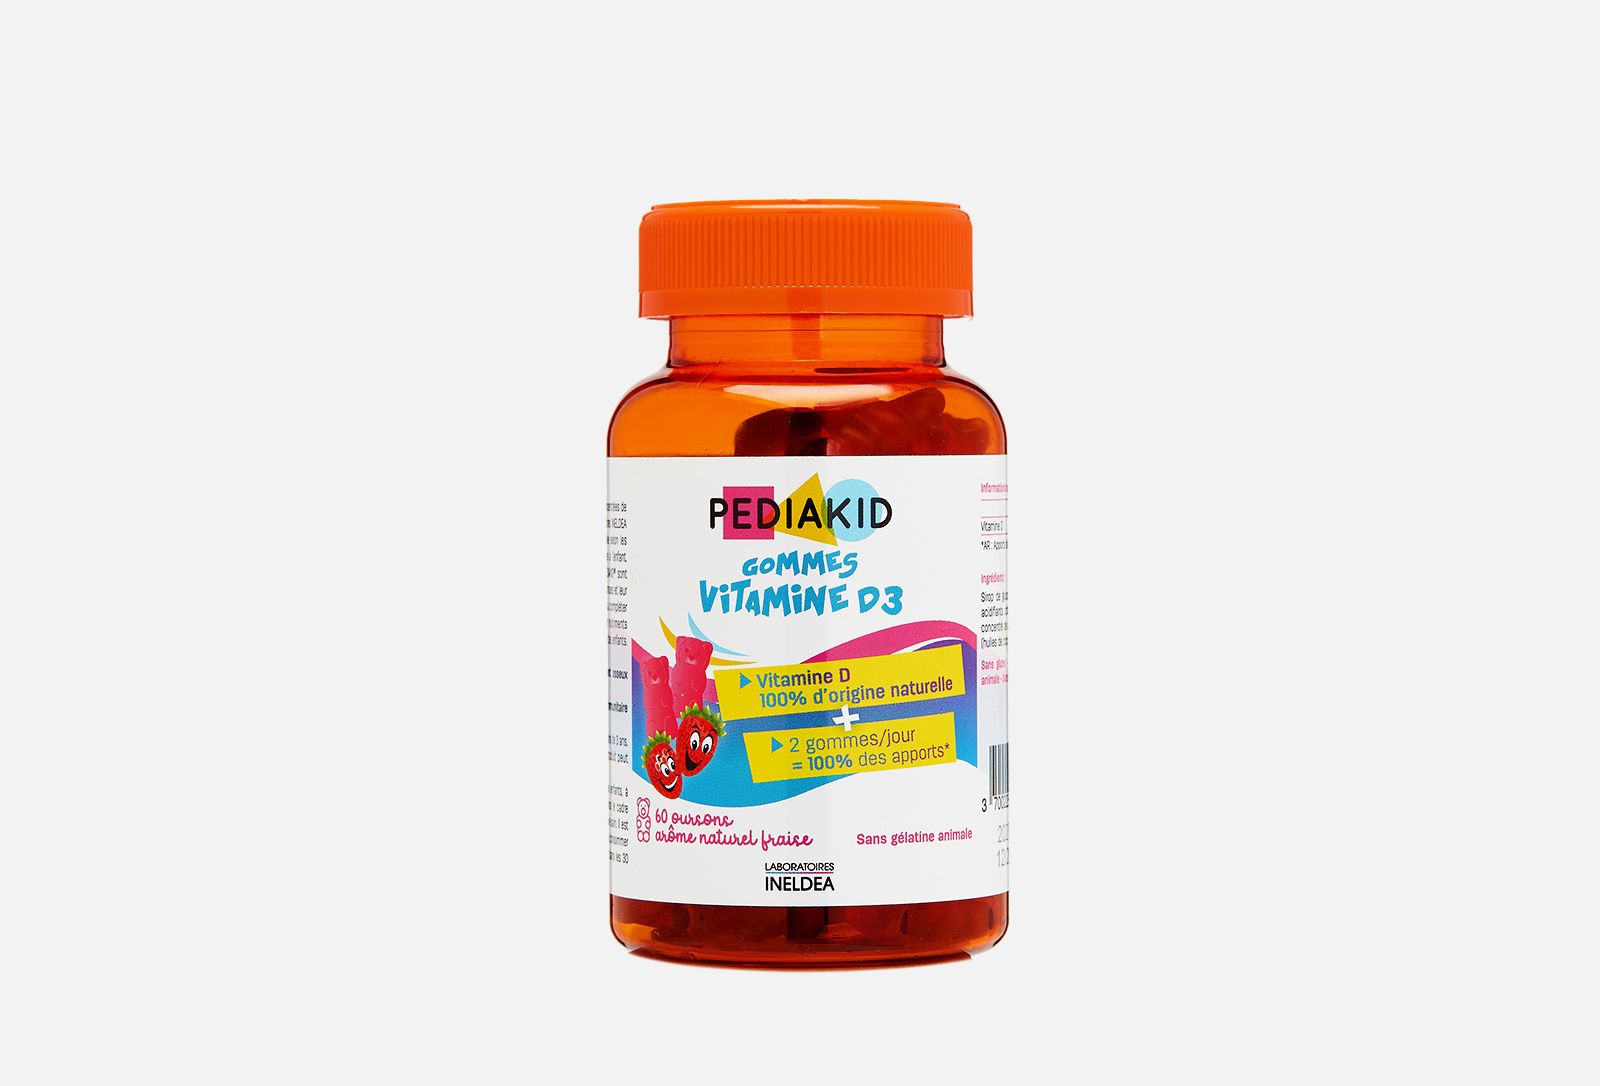 Pediakid vitamin. Pediakid витамин д3. Унитекс Педиакид витамин д3. Pediakid 22 витамина. Педиакид витамин д3 в каплях.